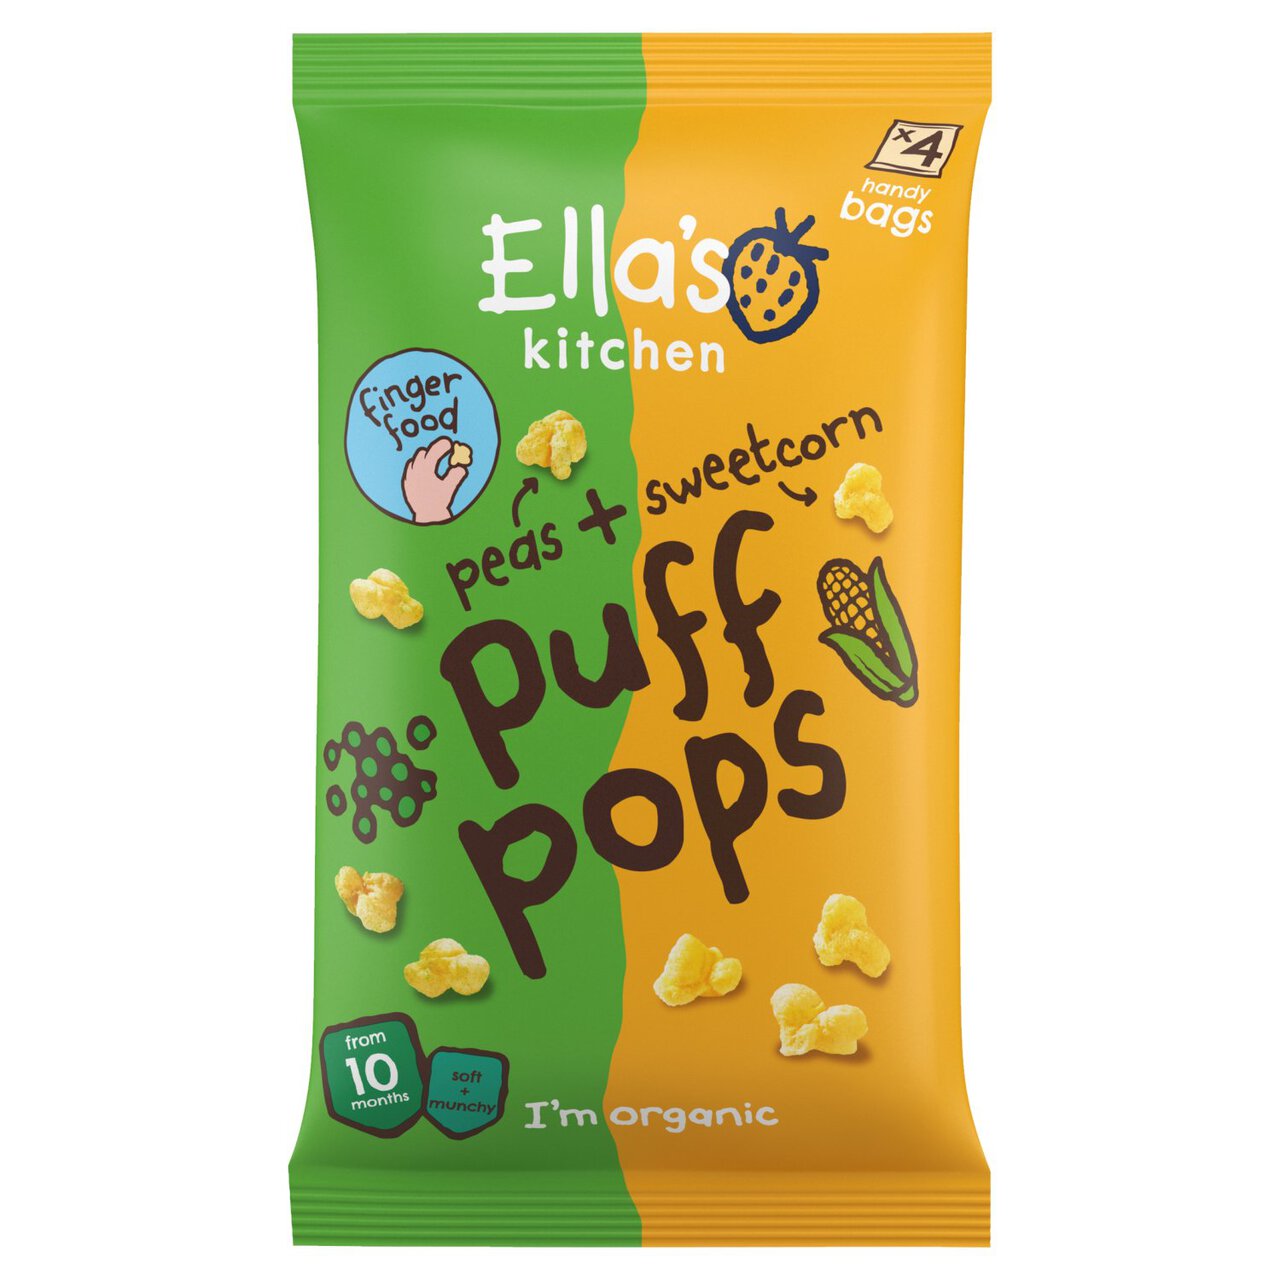 Ella's Kitchen Peas and Sweetcorn Organic Puff Pops, 10 mths+ Multipack 4 x 9g